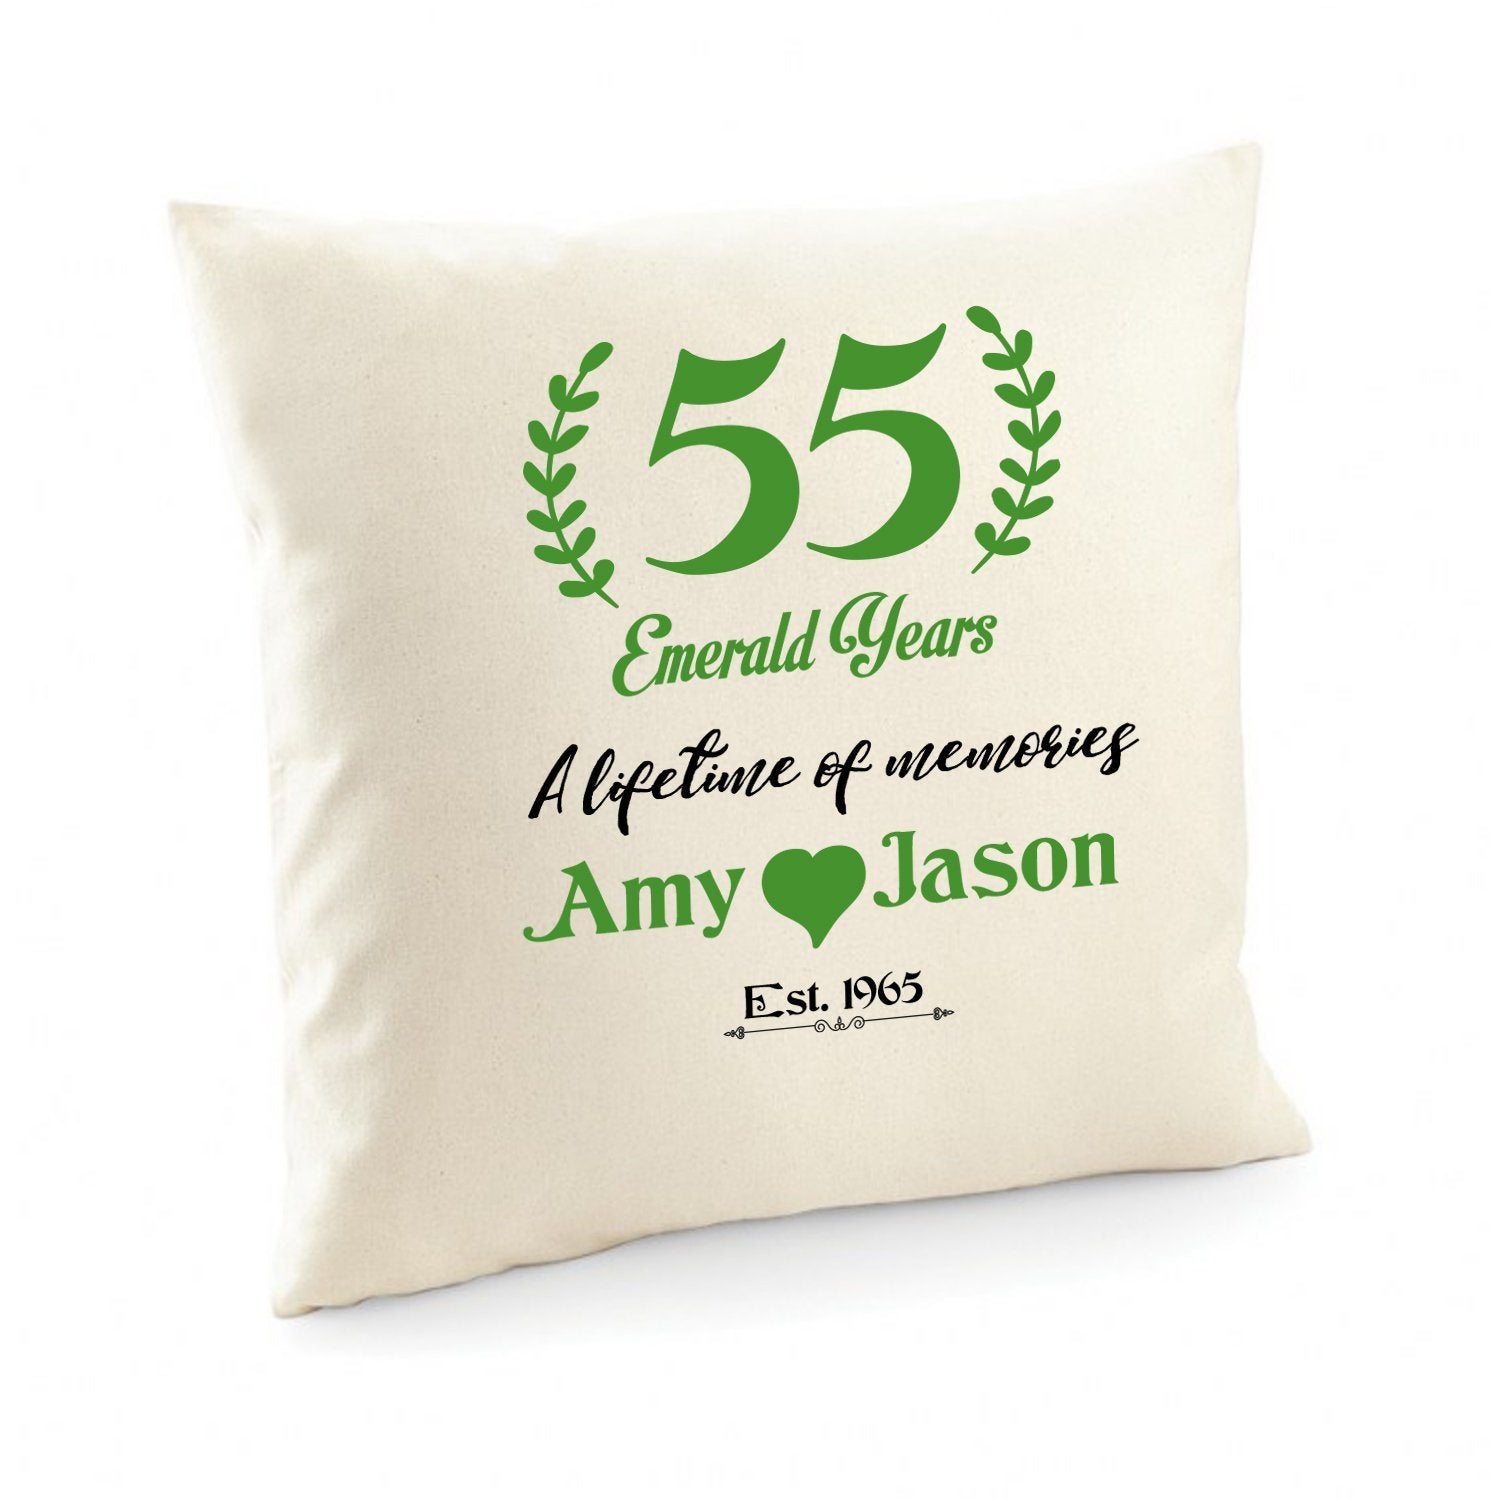 55 emerald years cushion cover, Personalised wedding anniversary gift